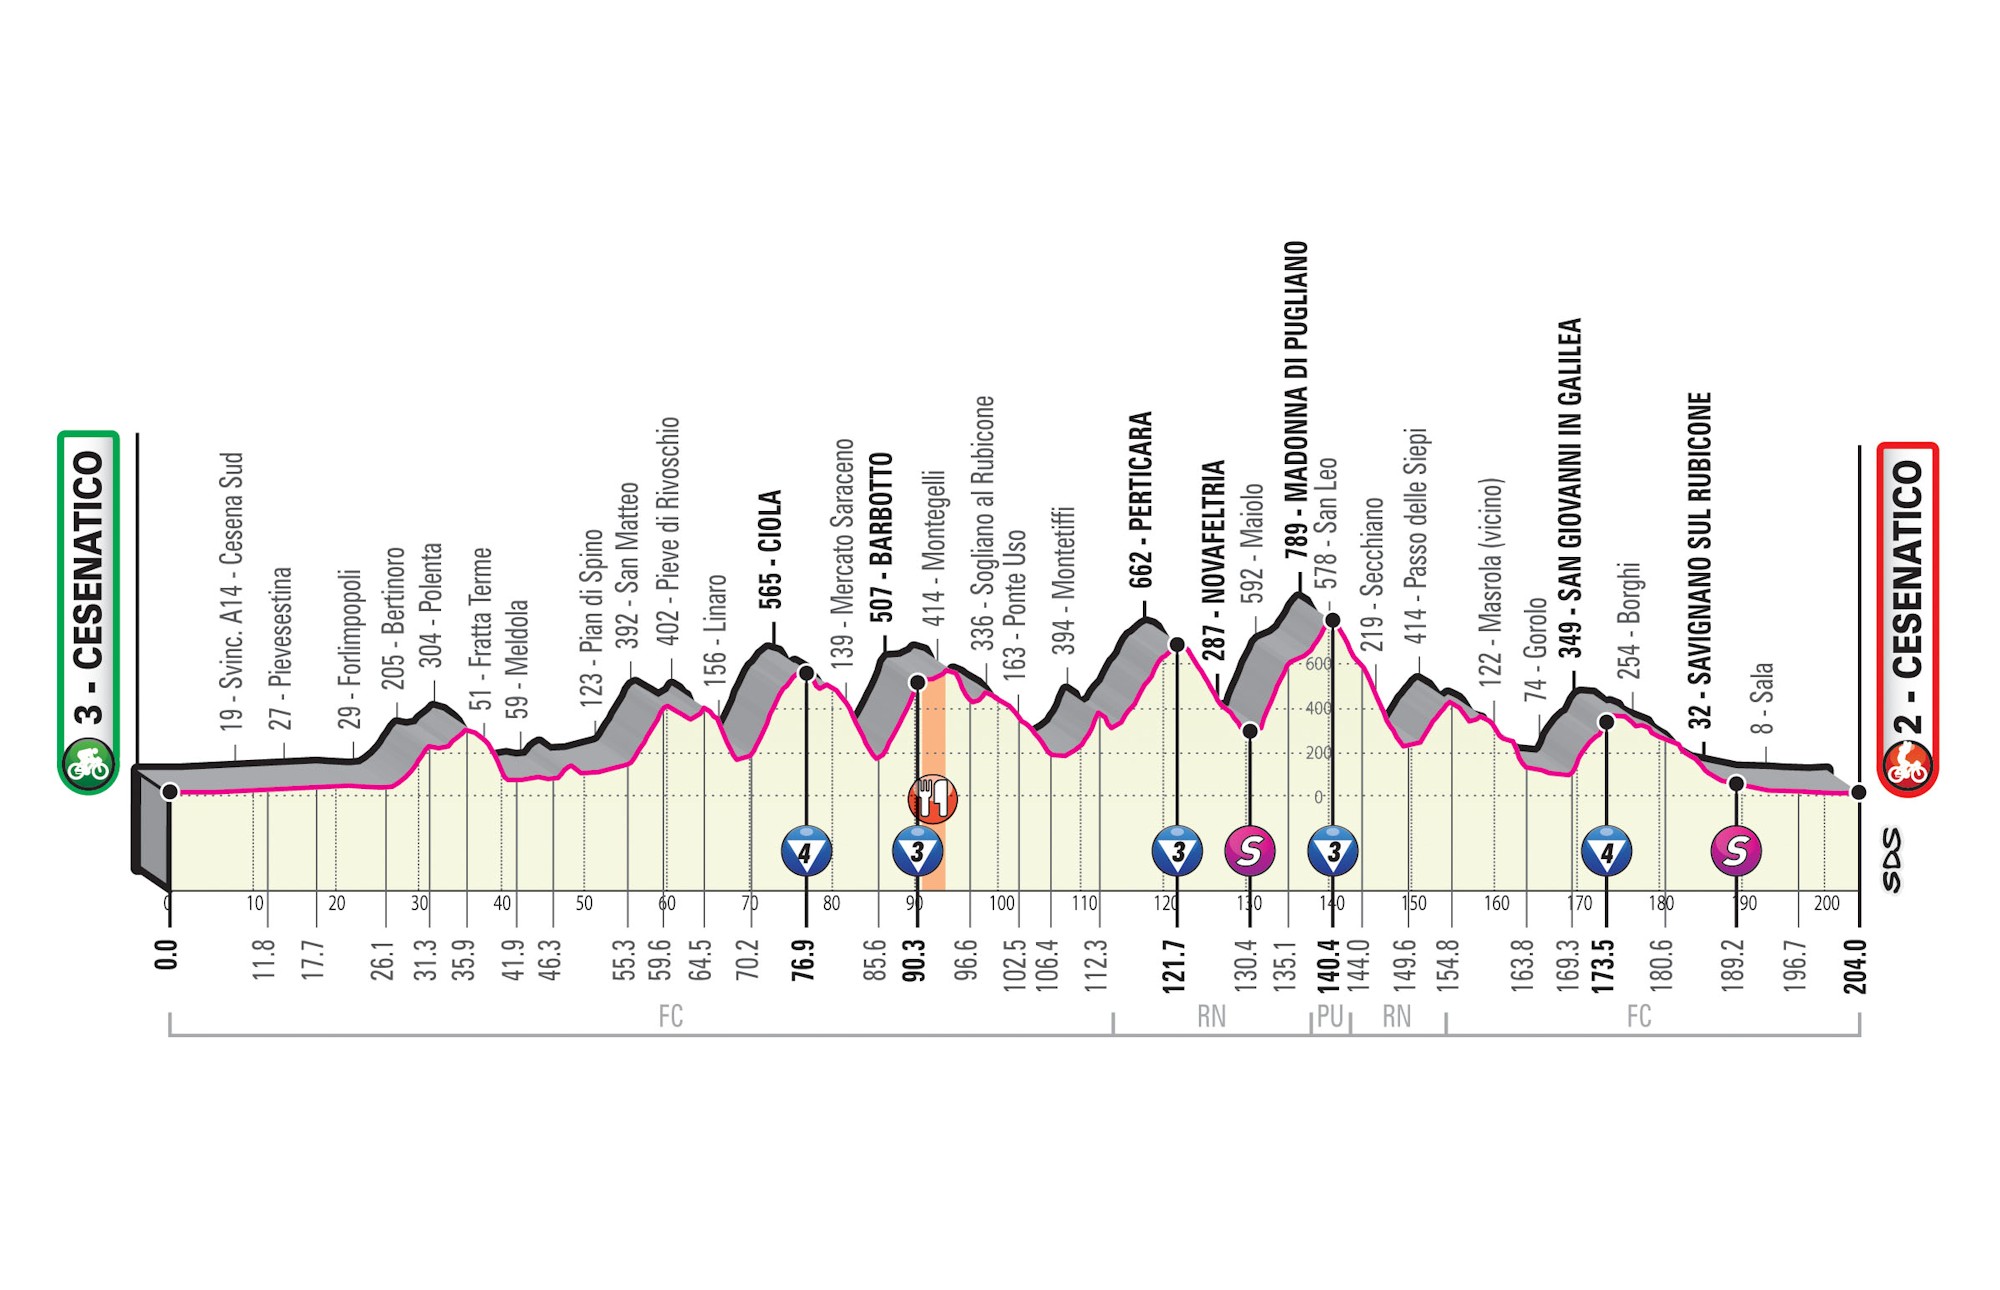 Giro d’Italia 2020: etap 12 – przekroje/mapki